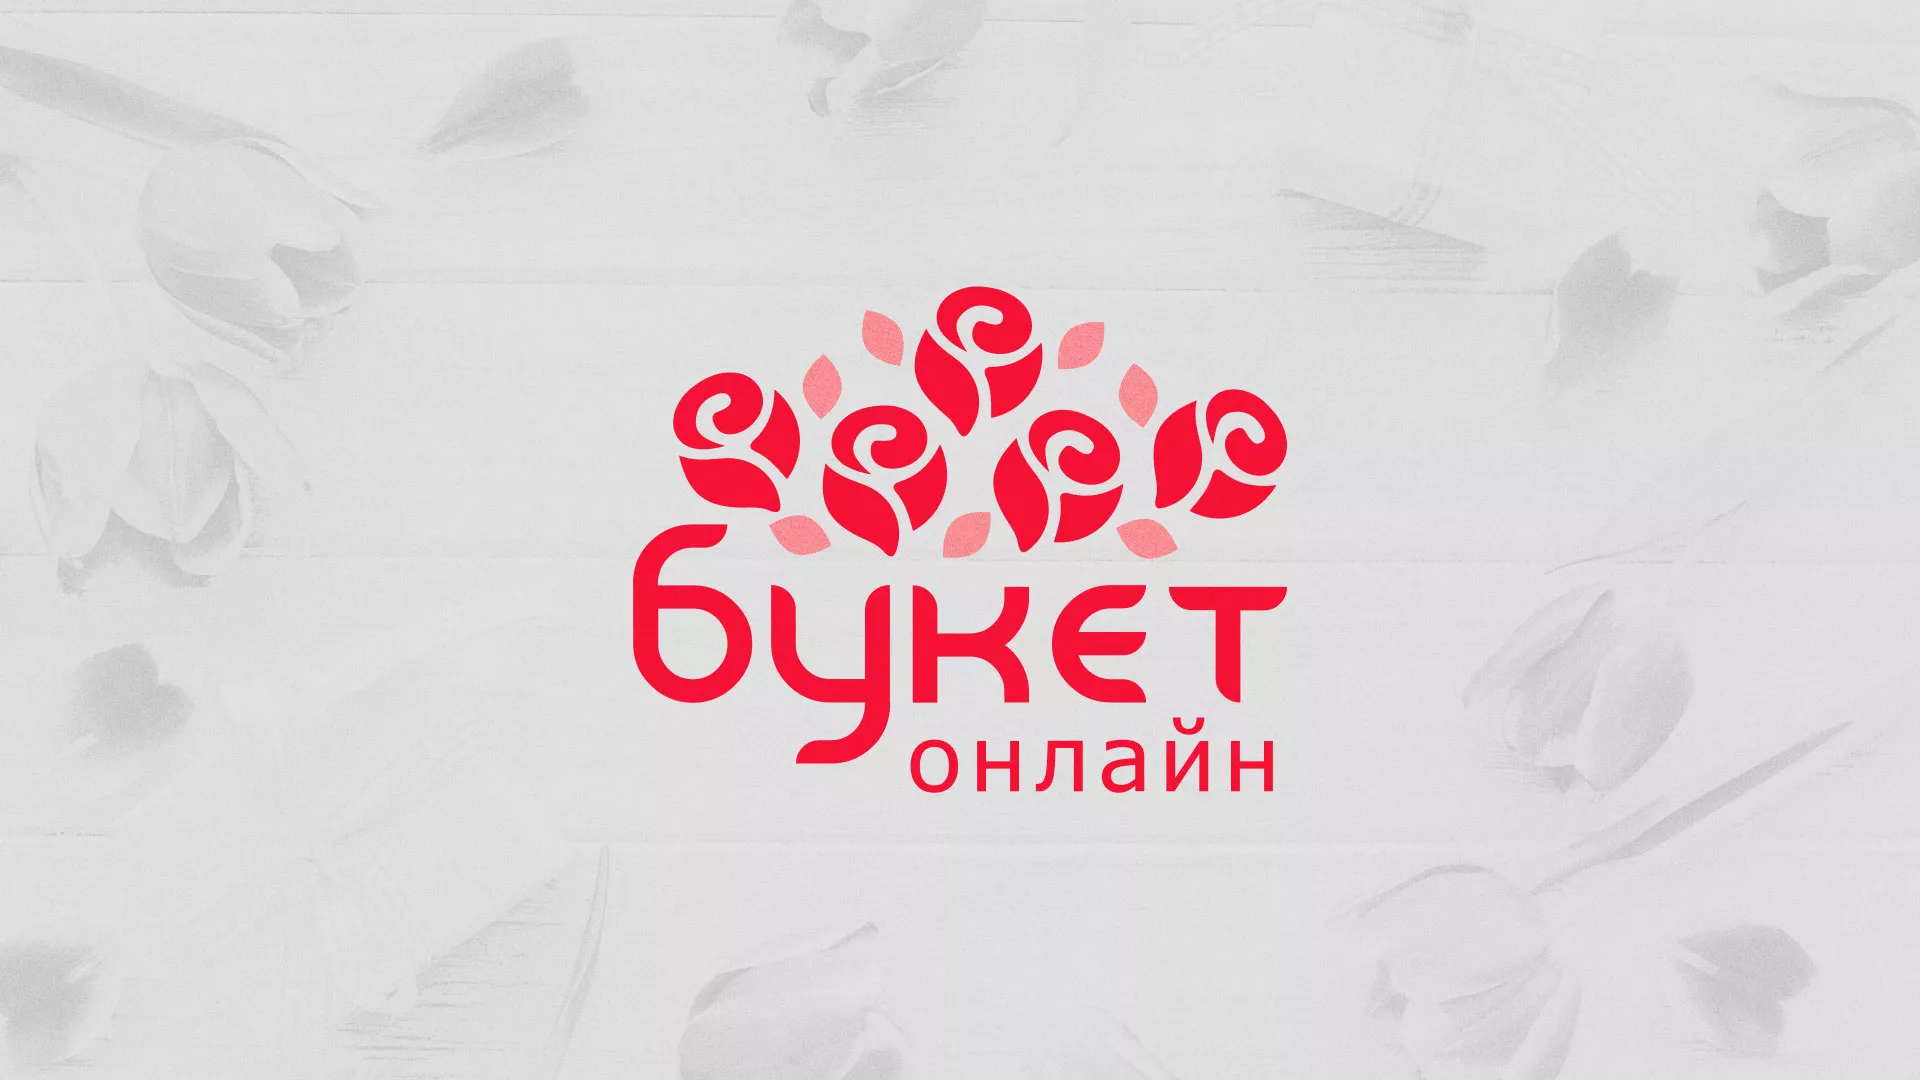 Создание интернет-магазина «Букет-онлайн» по цветам в Наро-Фоминске